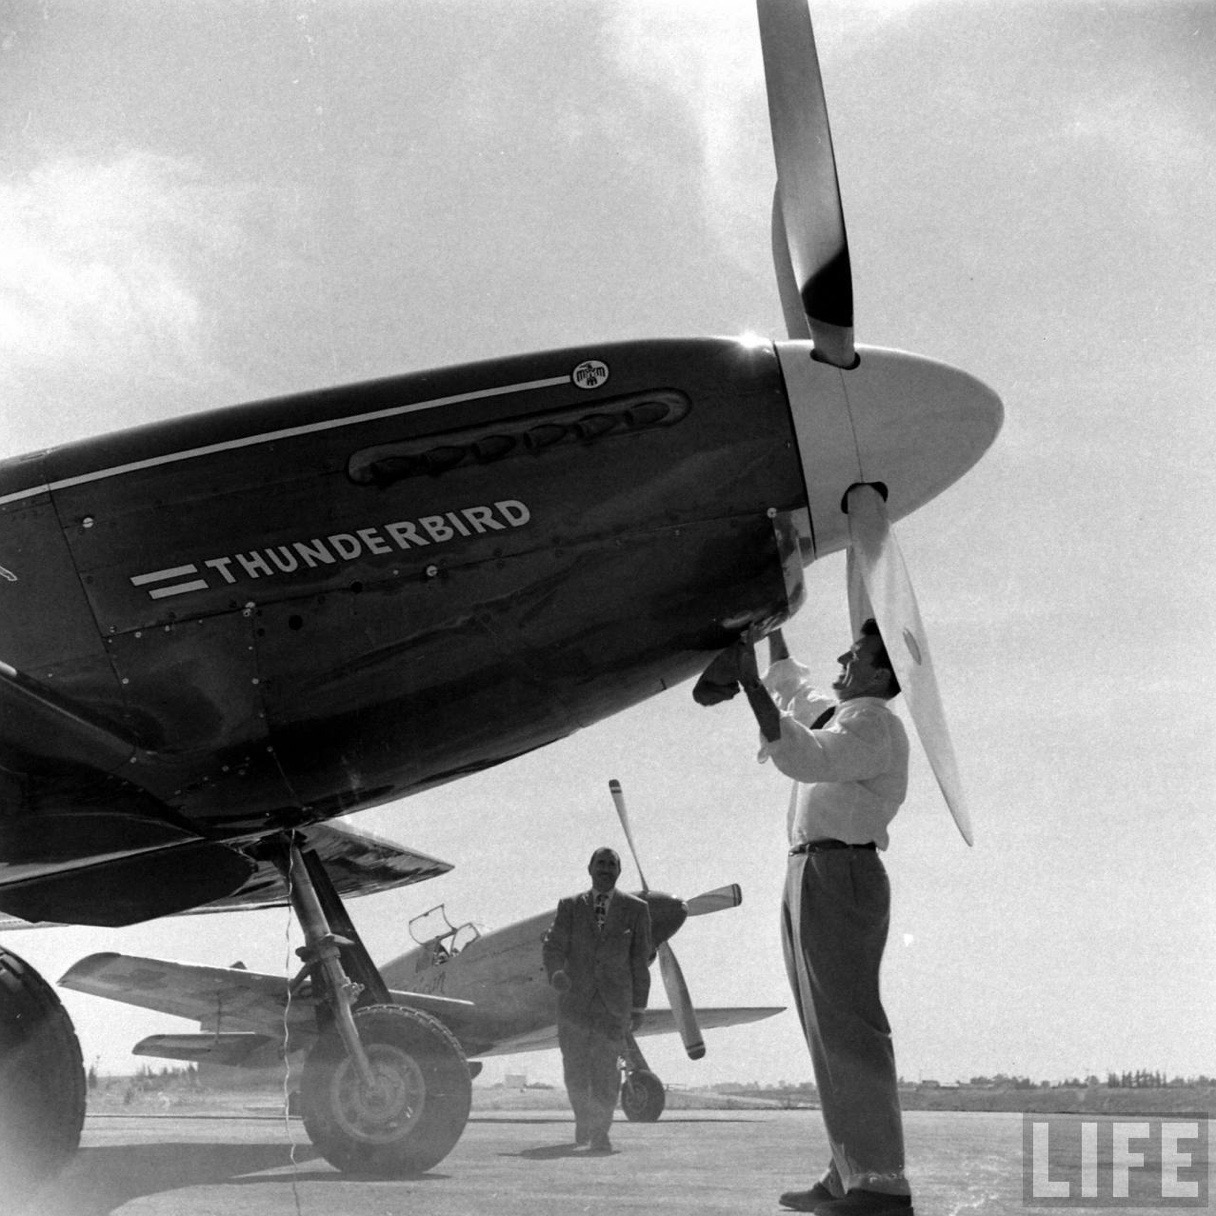 Joe De Bona polishes North American P-51C Mustang N5528N, “Thunderbird,” with Paul Mantz approaching, April 1949. Mantz’s P-51C NX1204, “Latin American,” is in the background. (Allan Grant/LIFE Magazine)